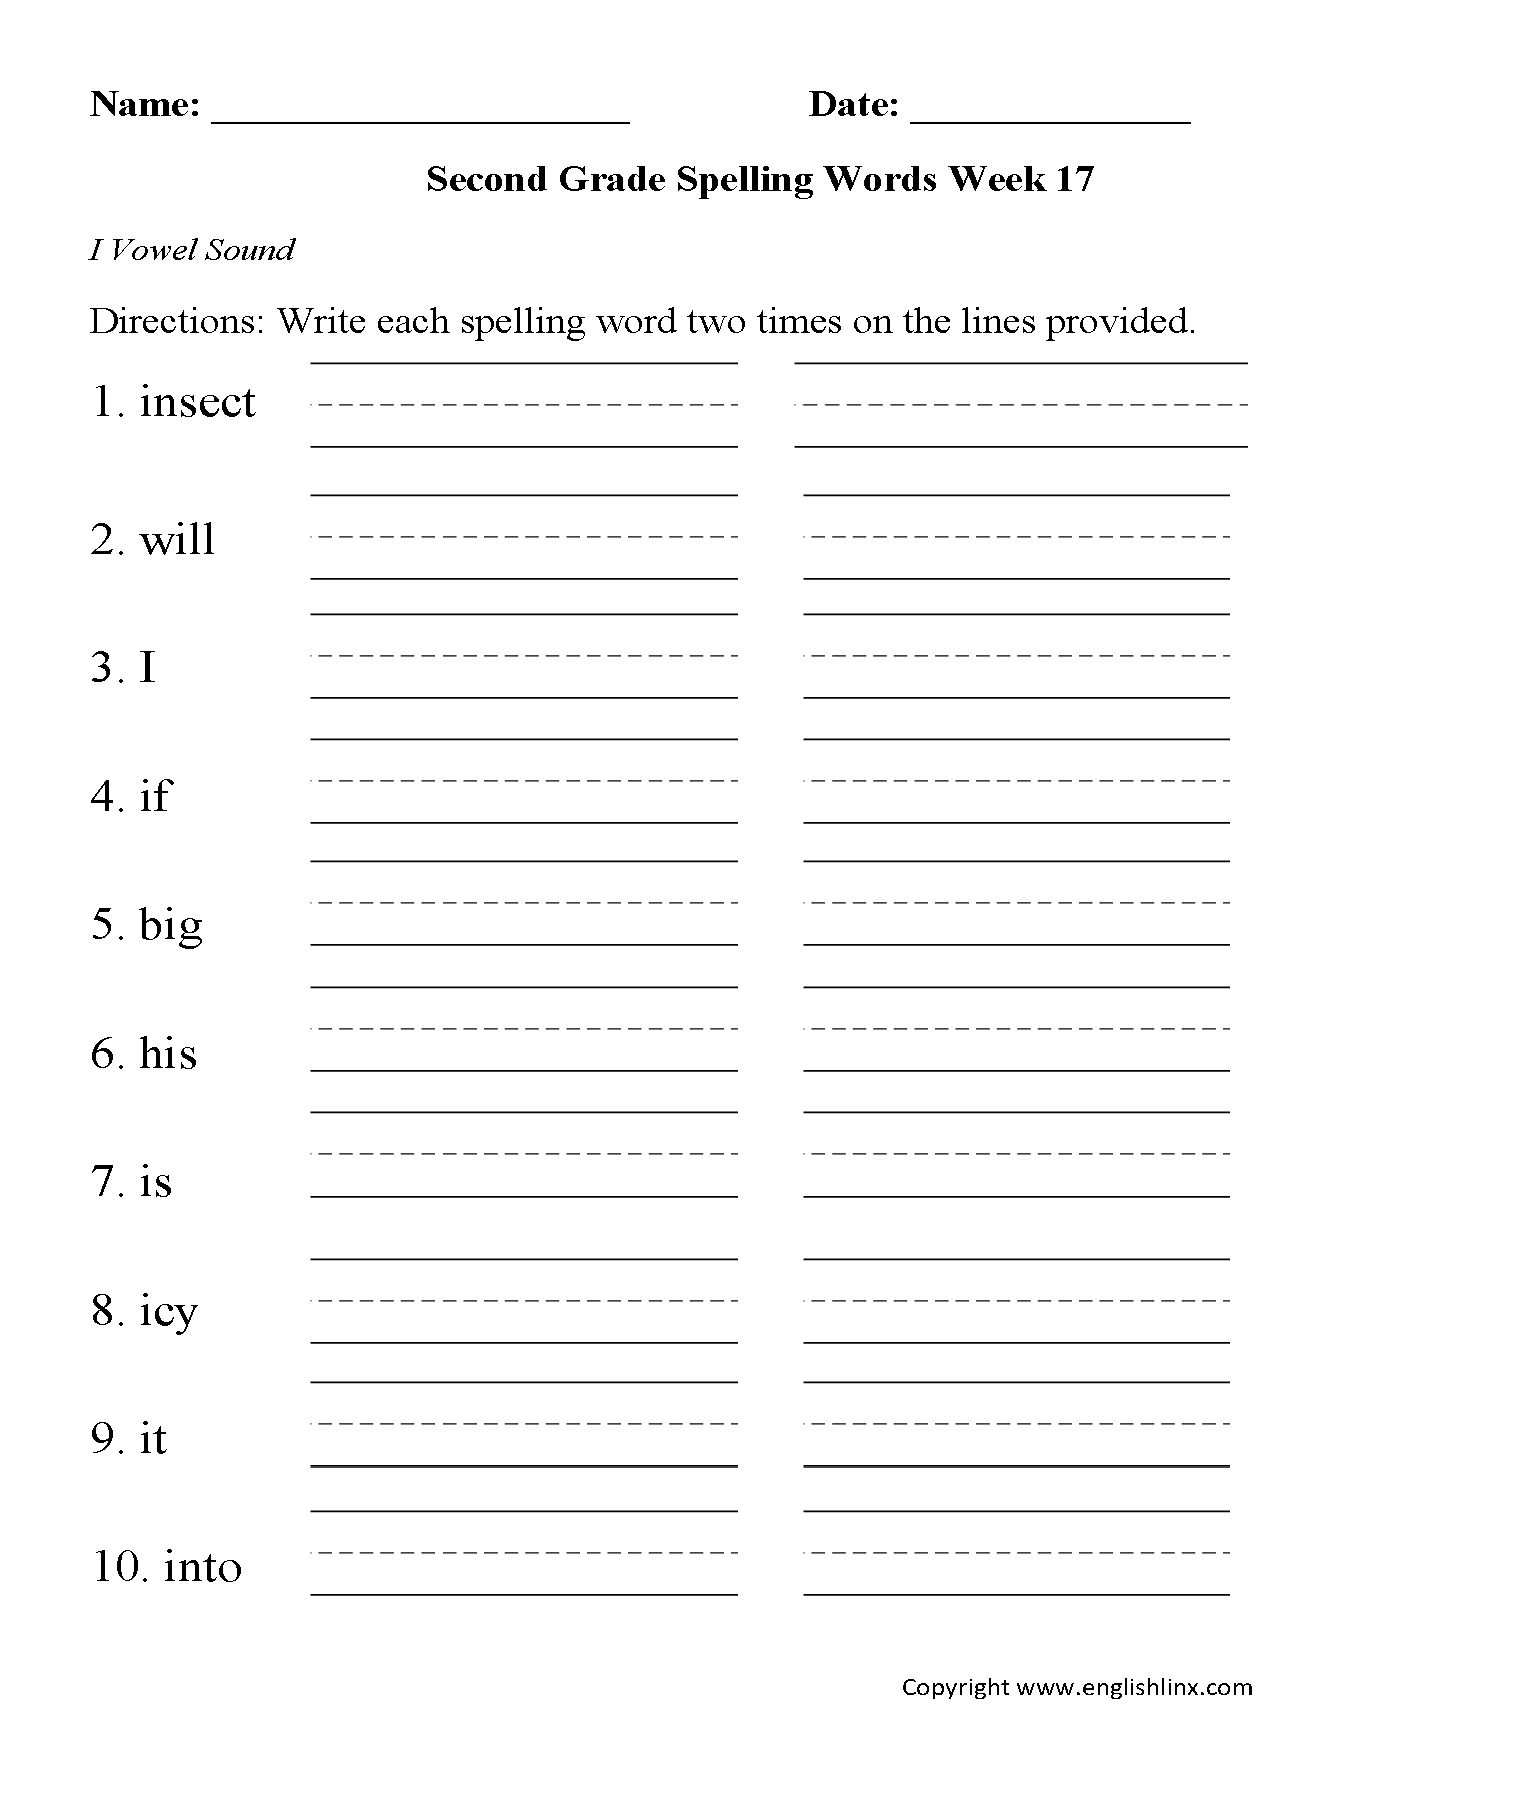 Spelling Worksheets | Second Grade Spelling Worksheets